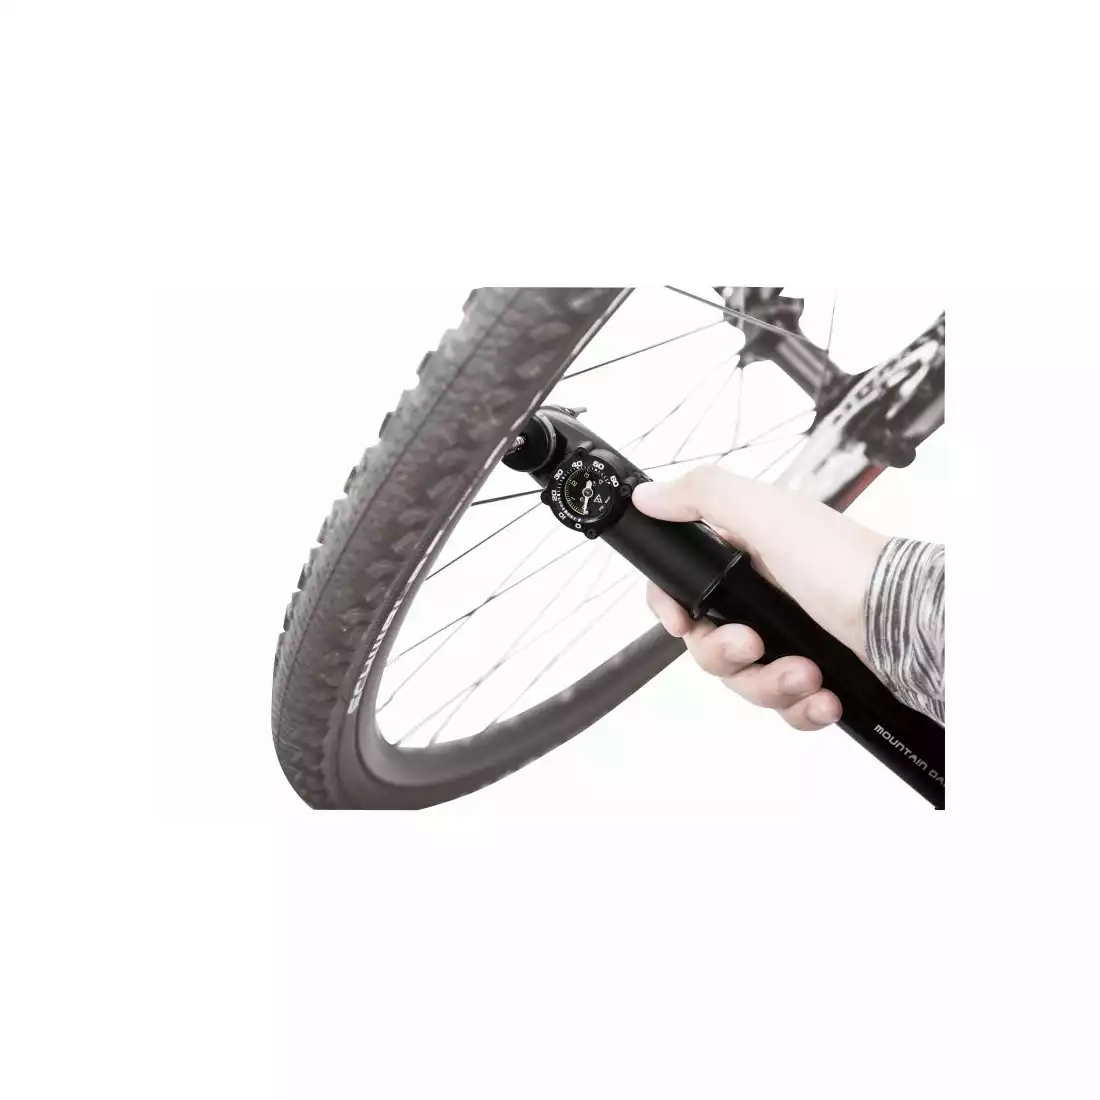 TOPEAK MOUNTAIN DA G DUAL ACTION bicycle pump with pressure gauge 